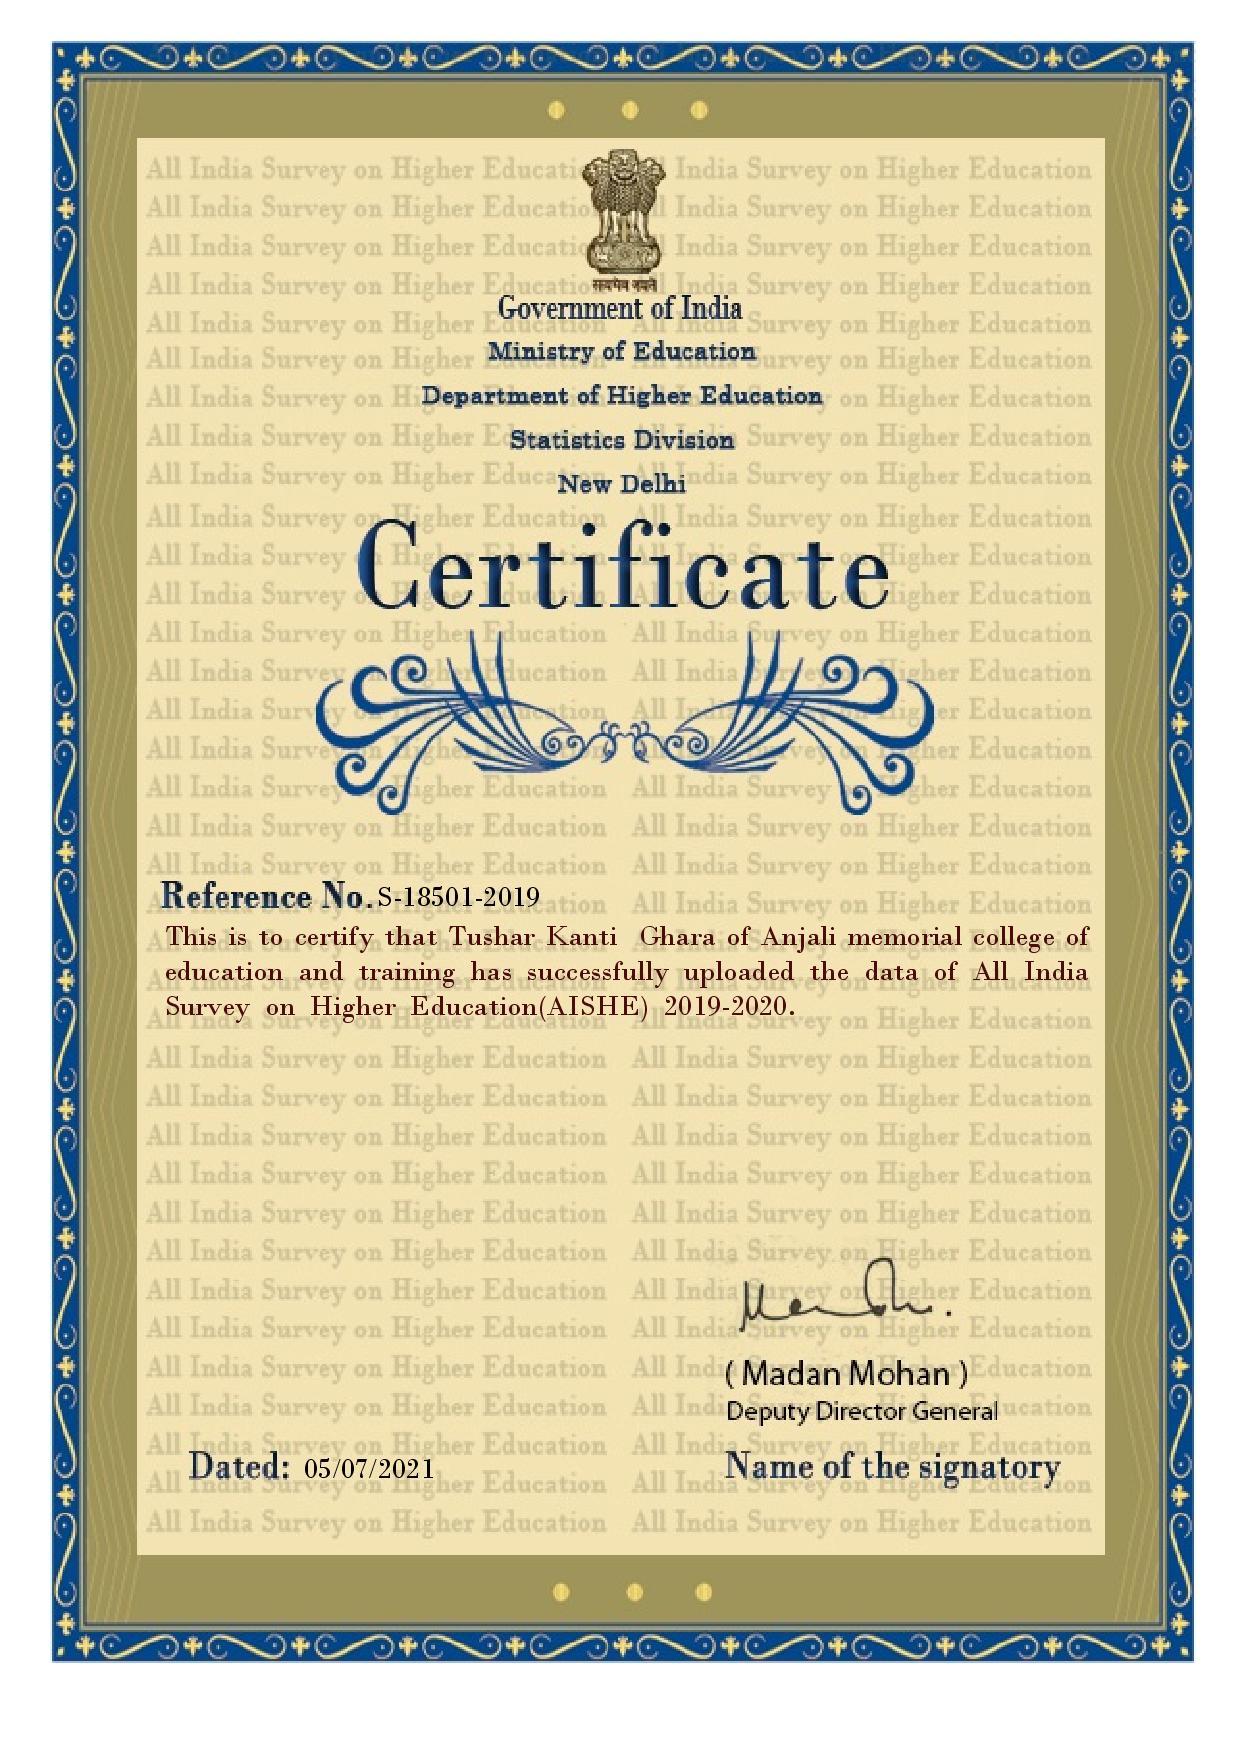 AISHE Certificate 2019-20